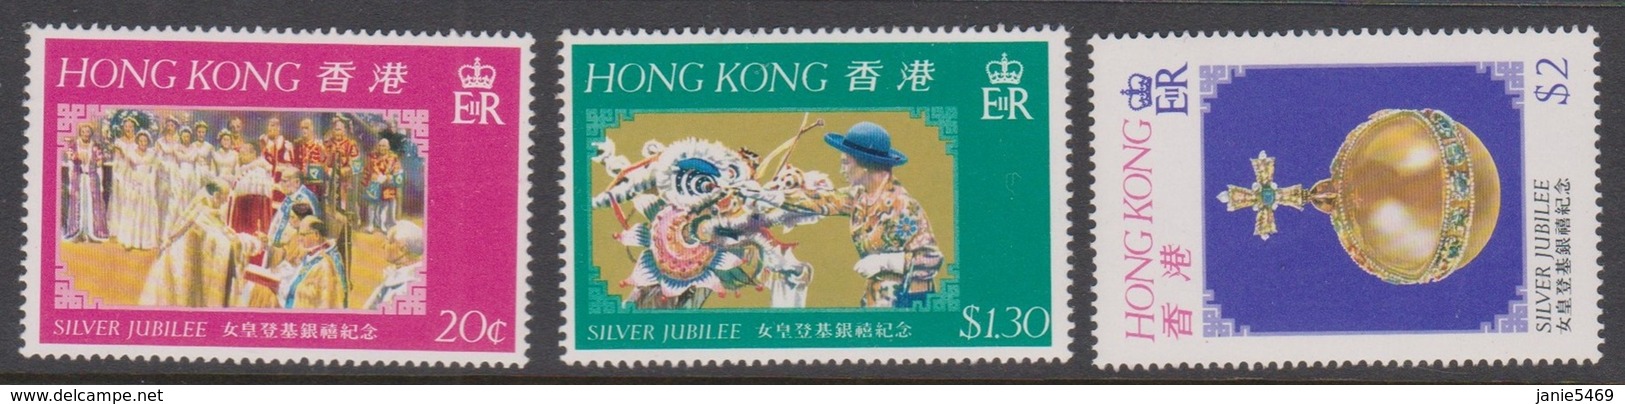 Hong Kong Scott 335-337 1977 Silver Jubilee, Mint Never Hinged - Unused Stamps